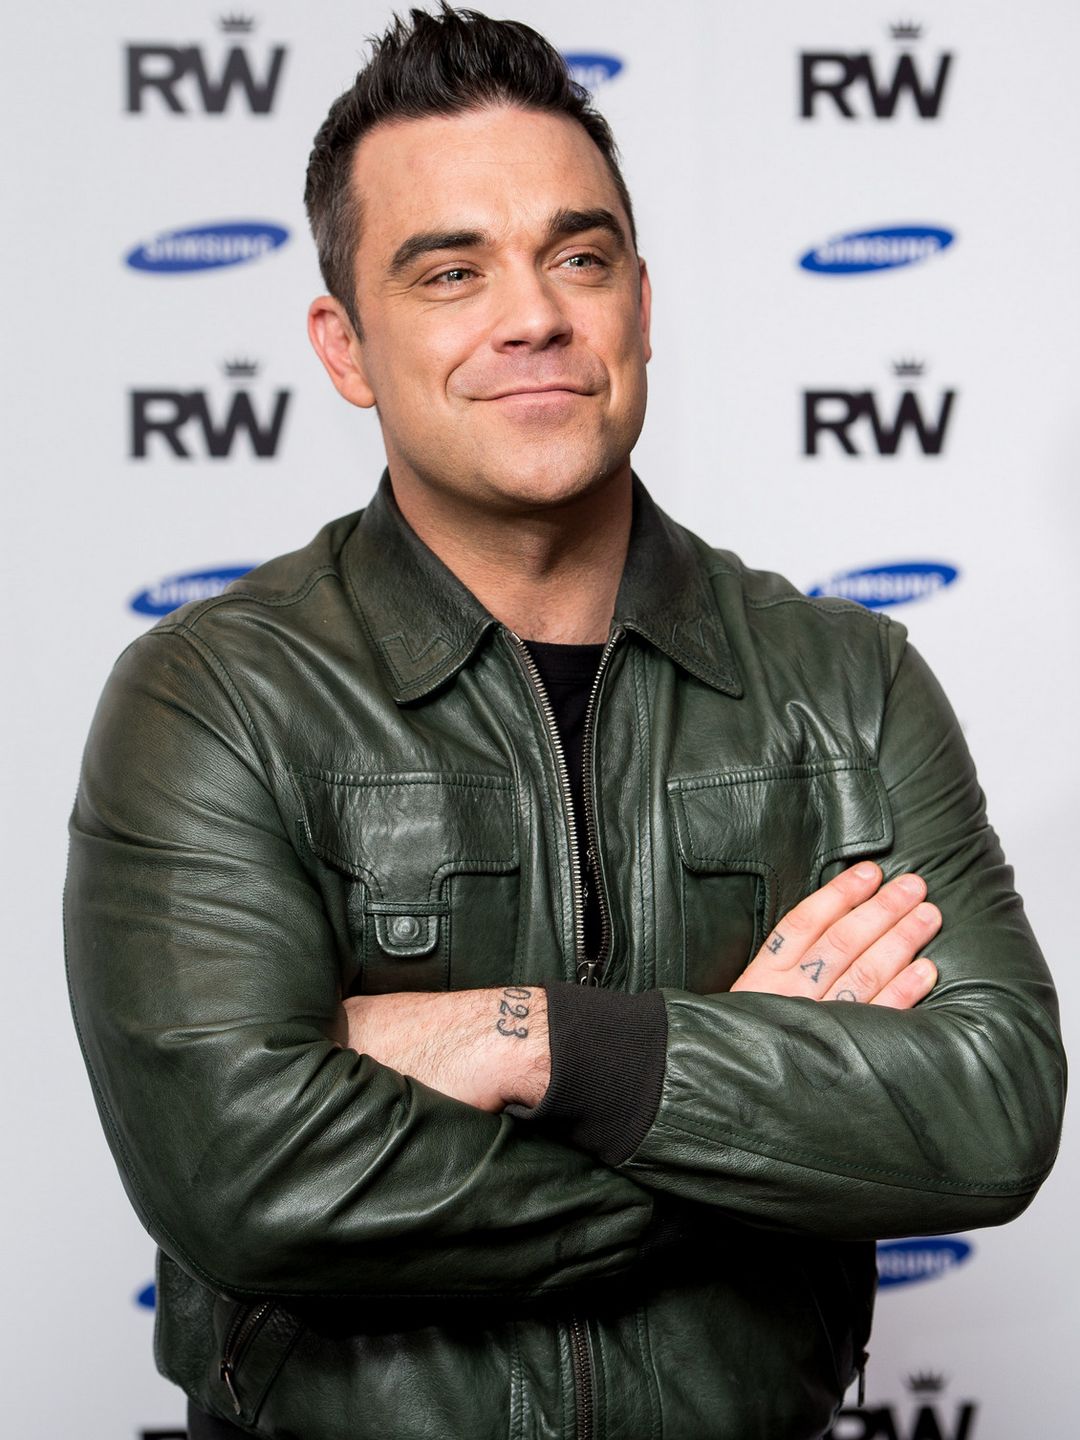 Robbie Williams childhood